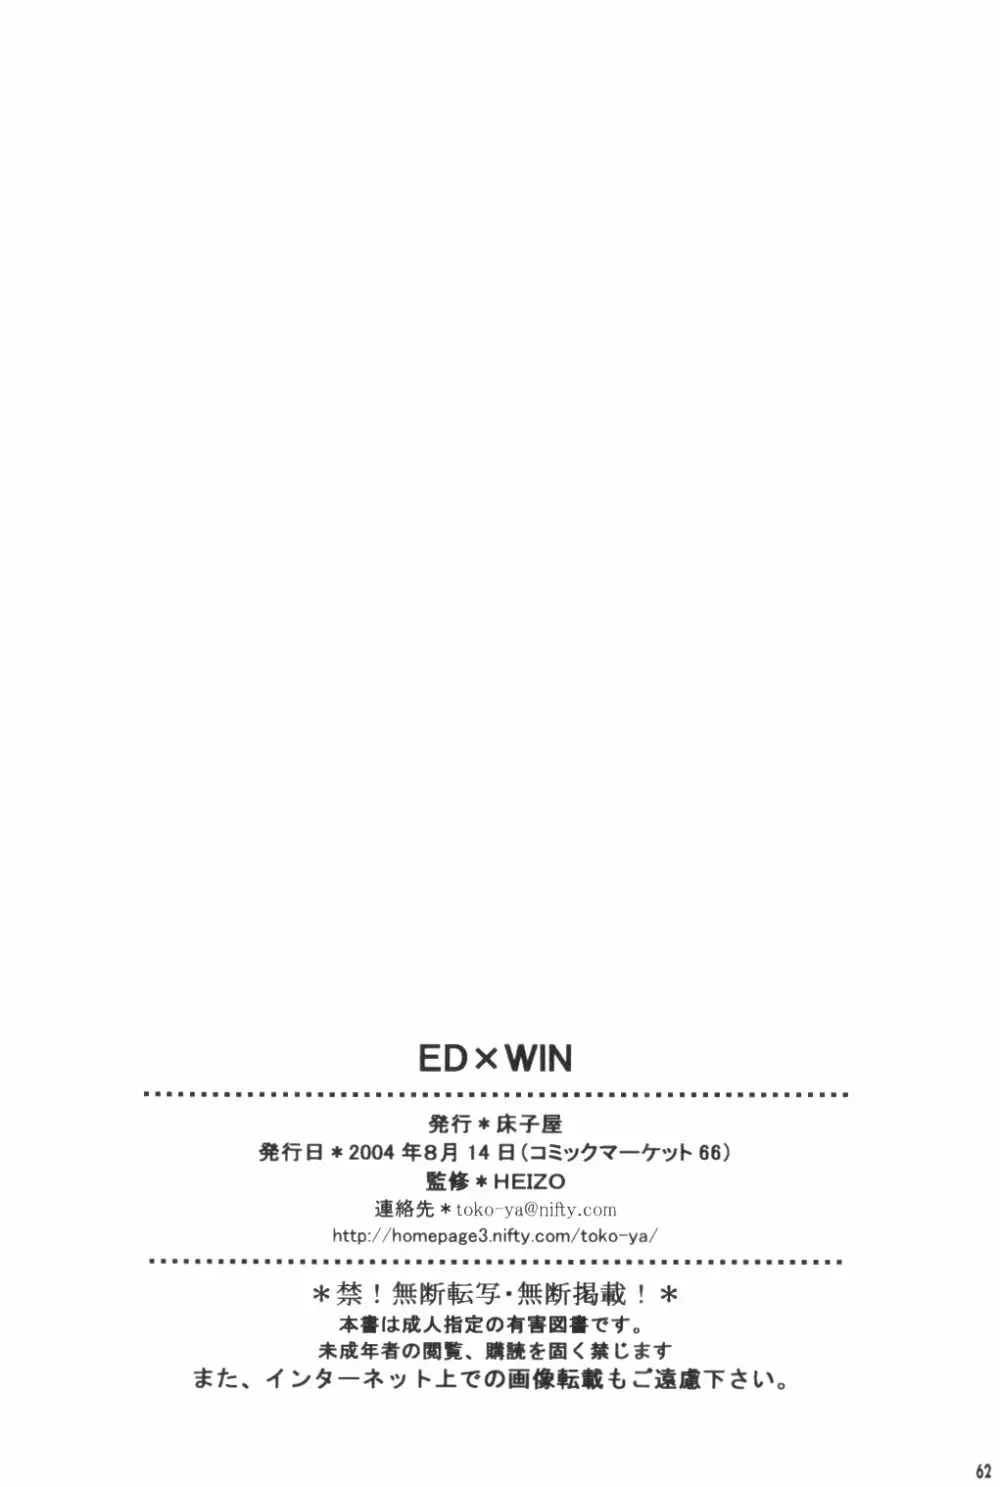 ED x WIN Page.61